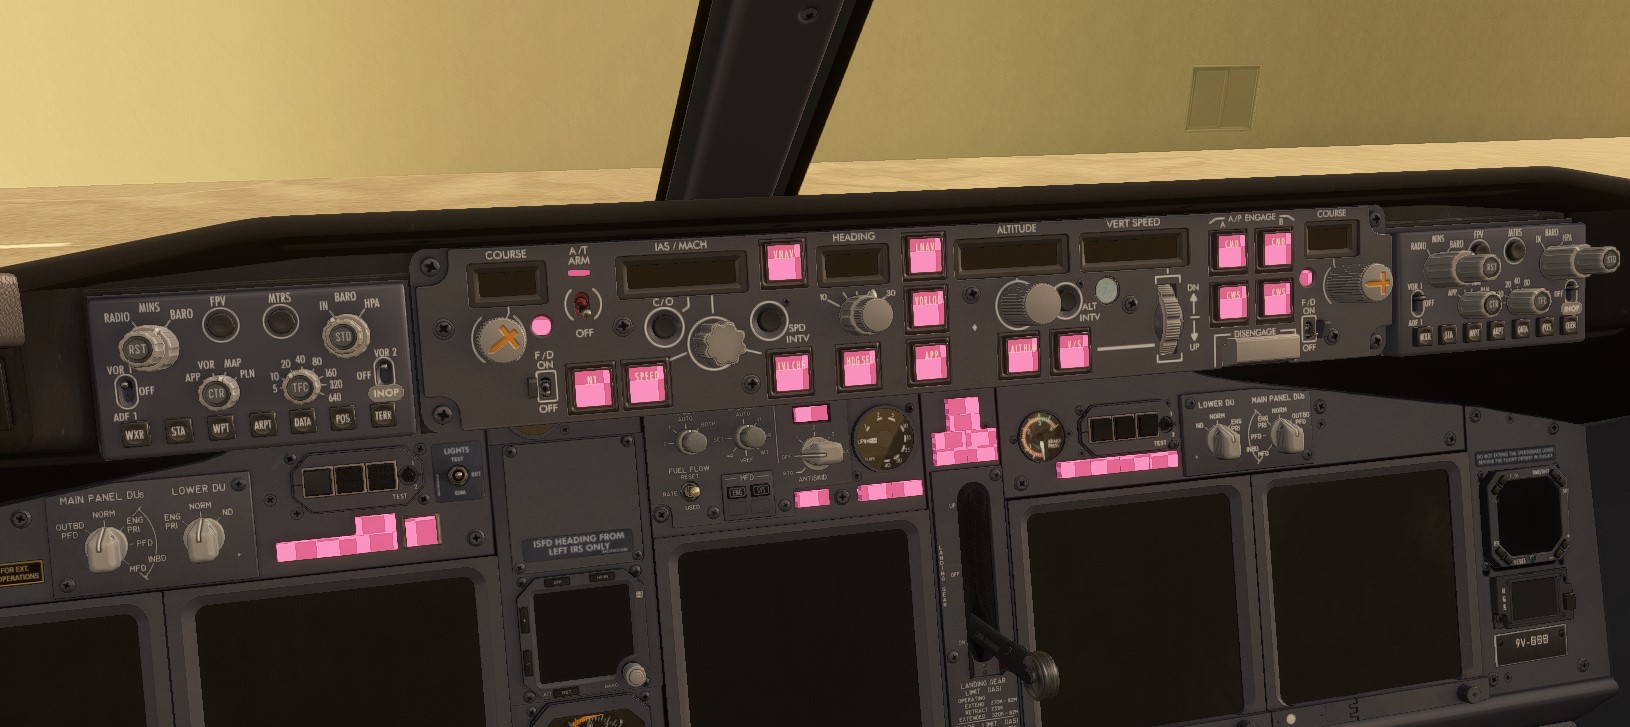 Pink Boeing 30